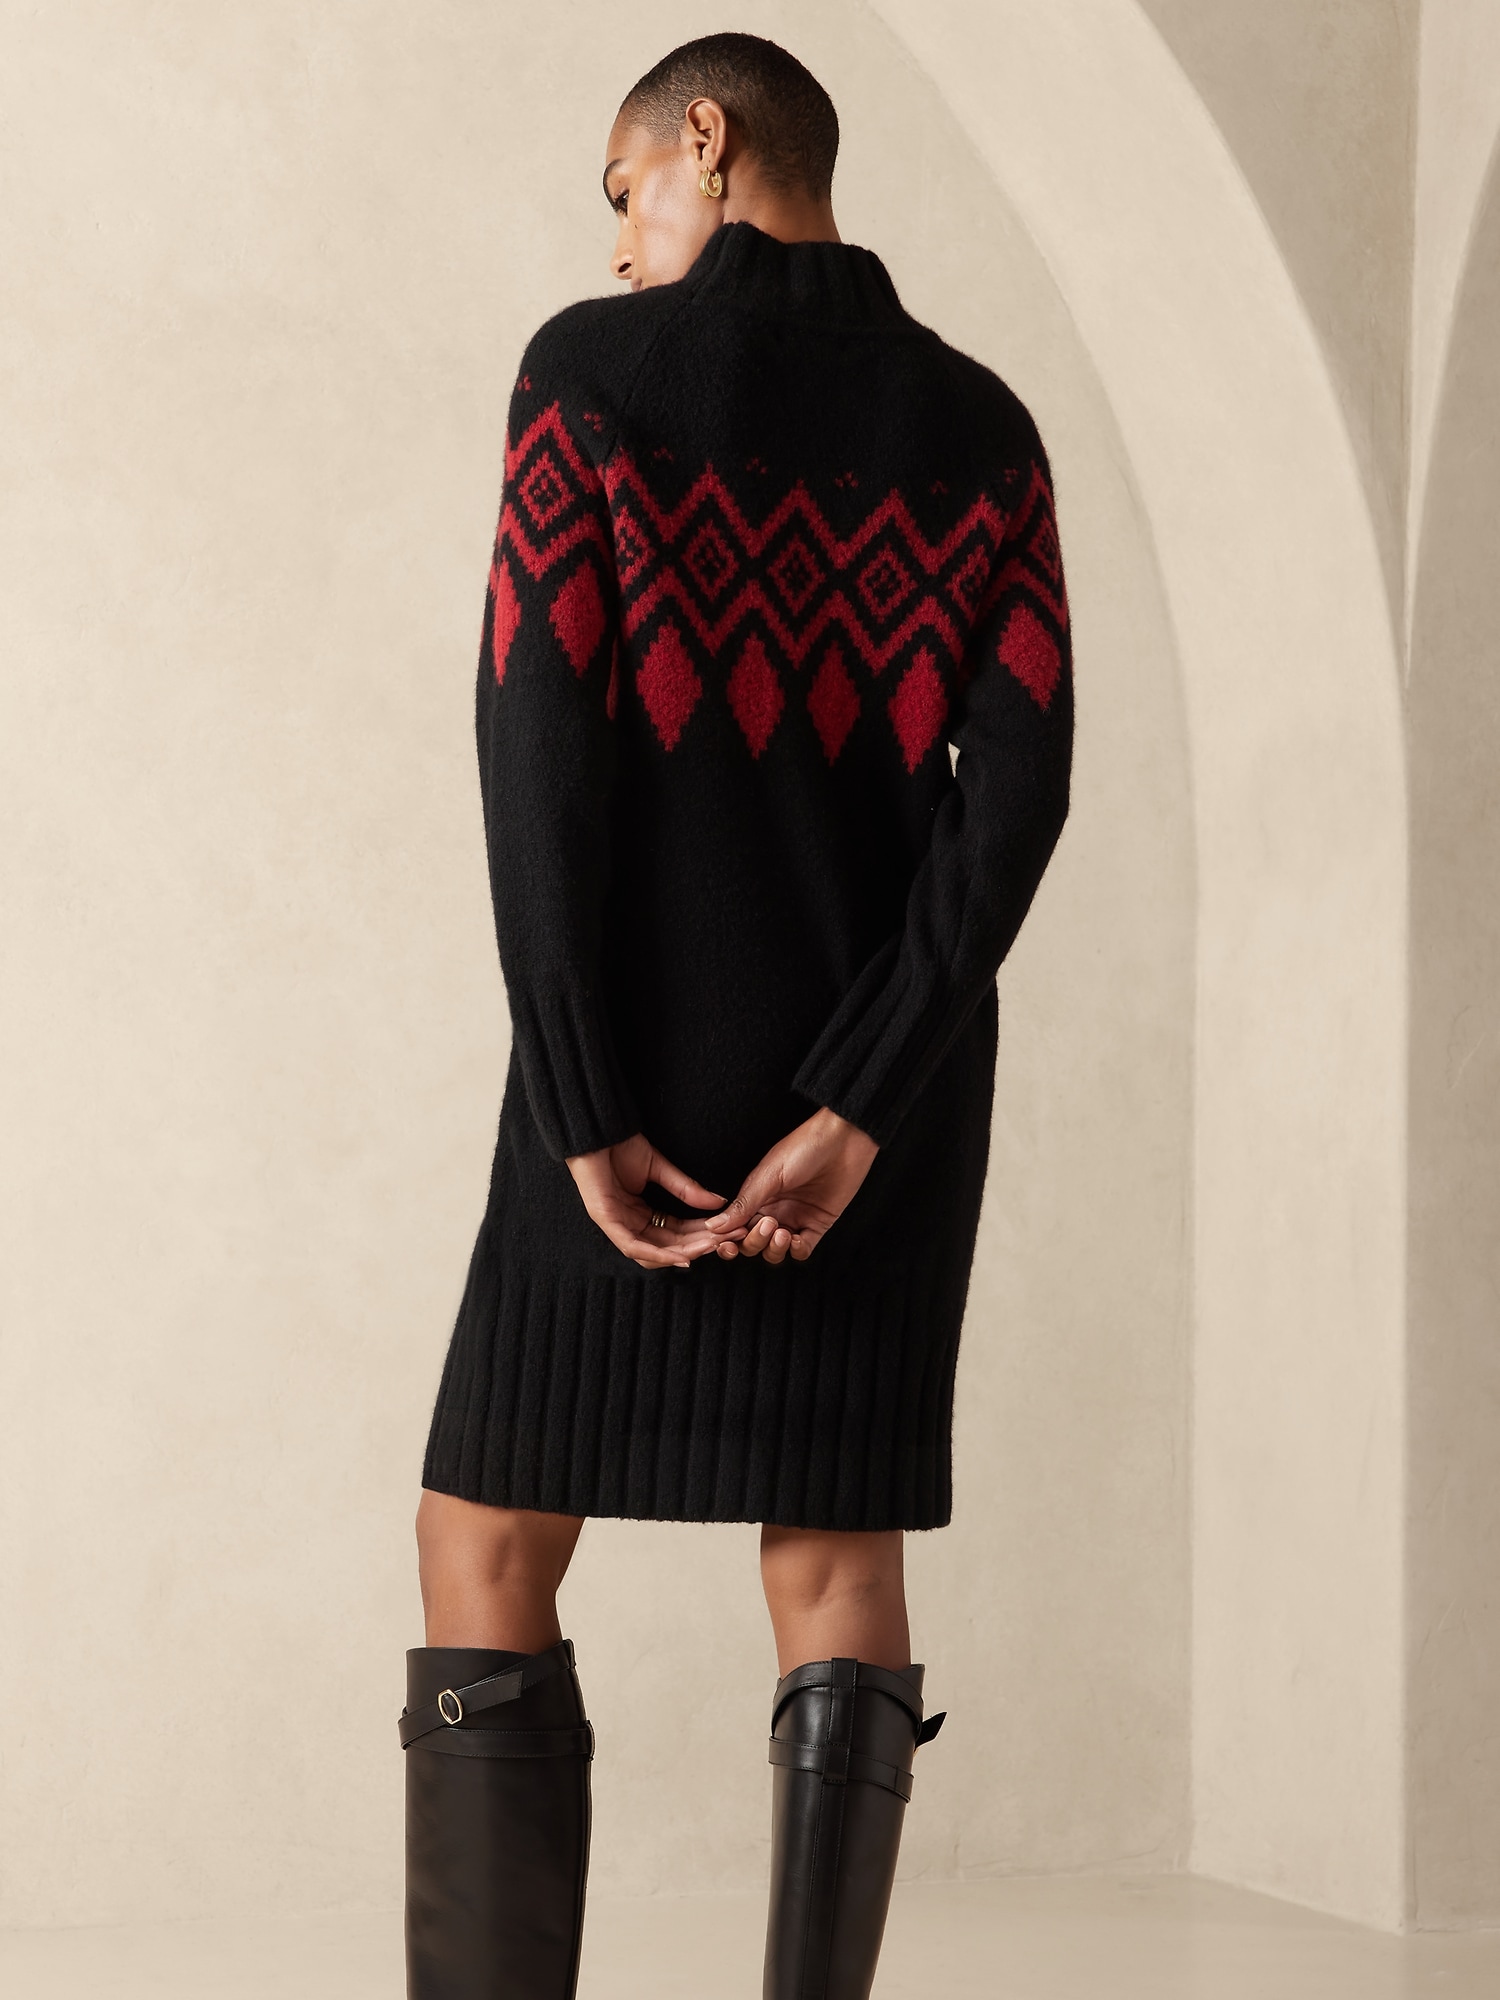 COCOBLEU Women's Plus Size 2X Plaid Print Knit Sweater Dress